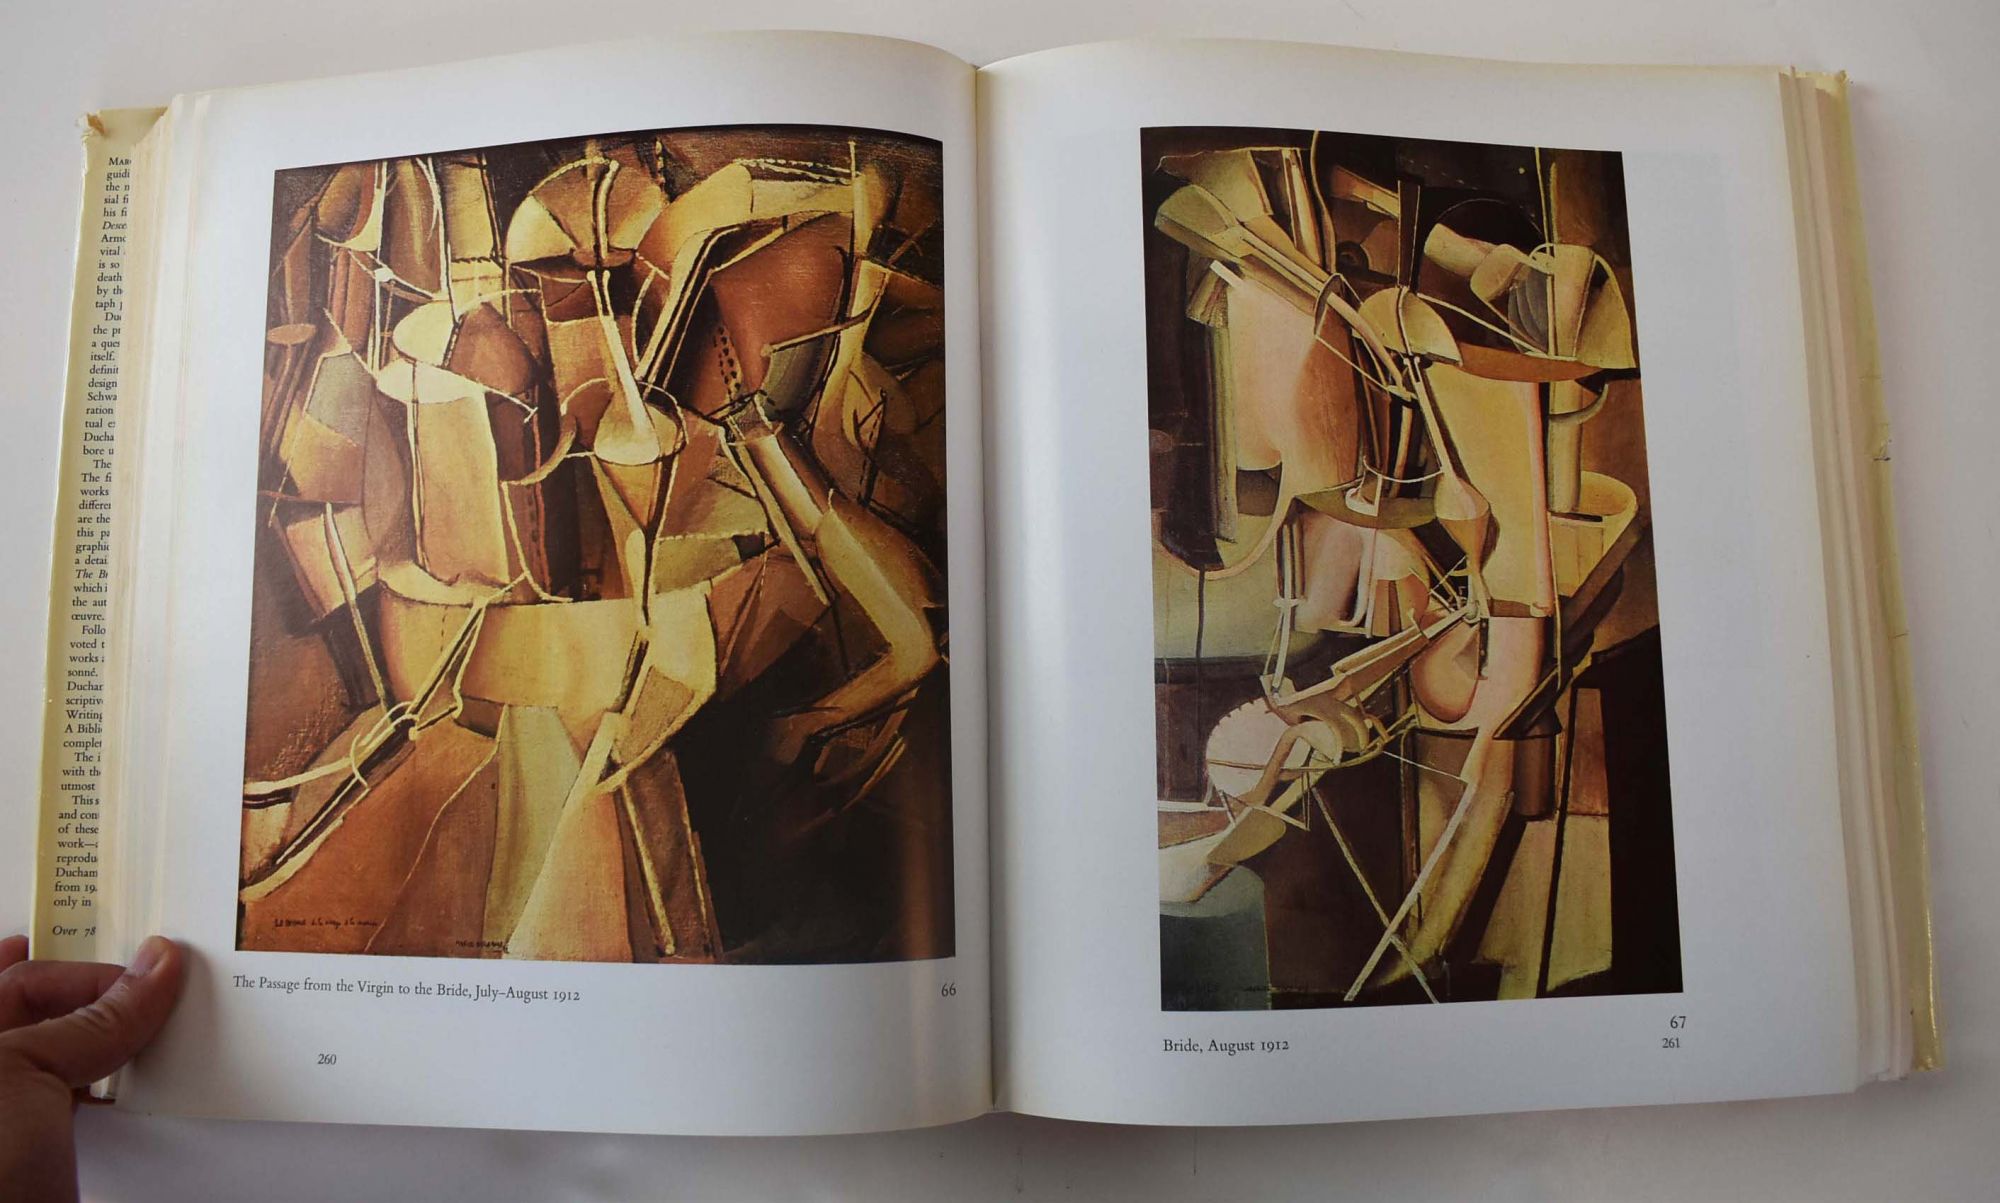 The Complete Works of Marcel Duchamp | Arturo Schwarz